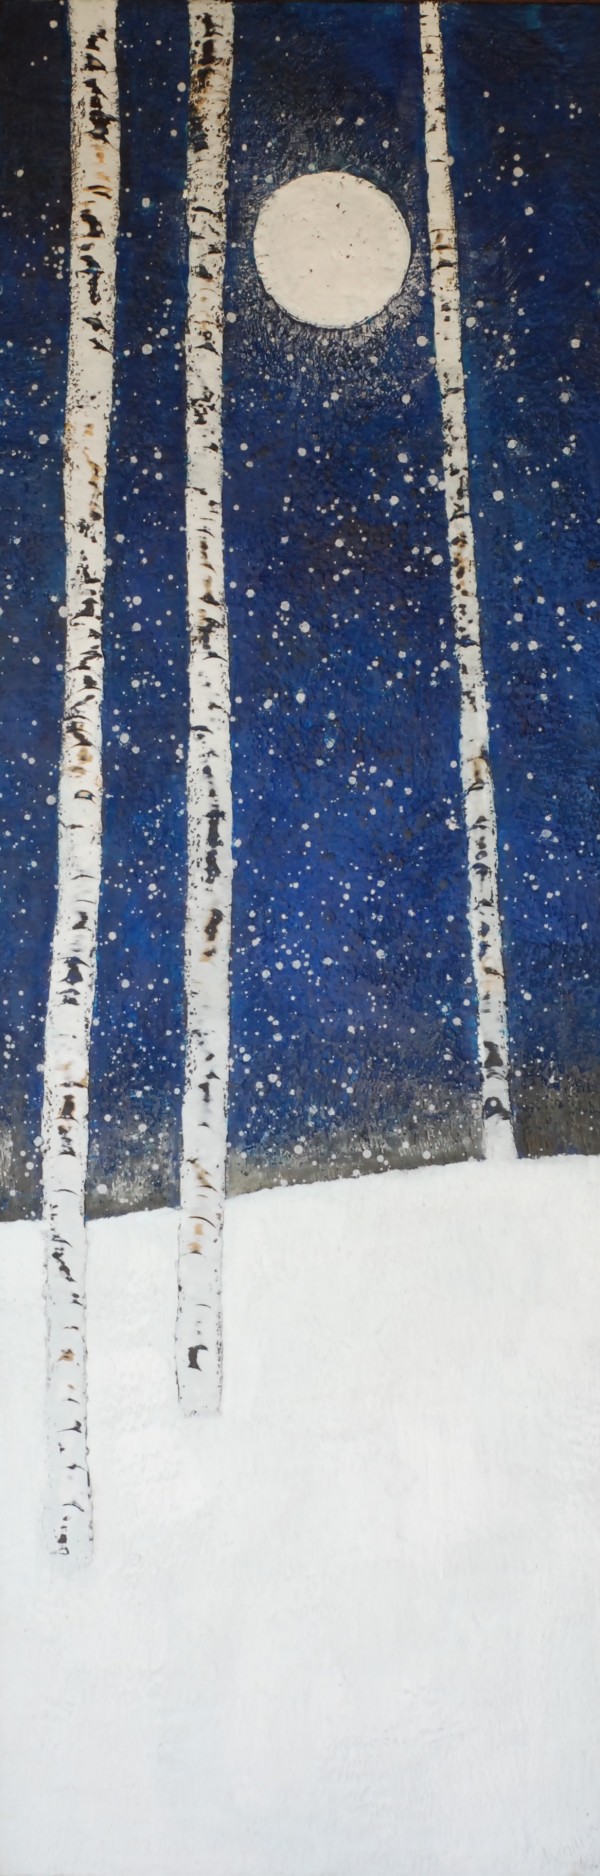 Winter Solstice by Susan  Wallis